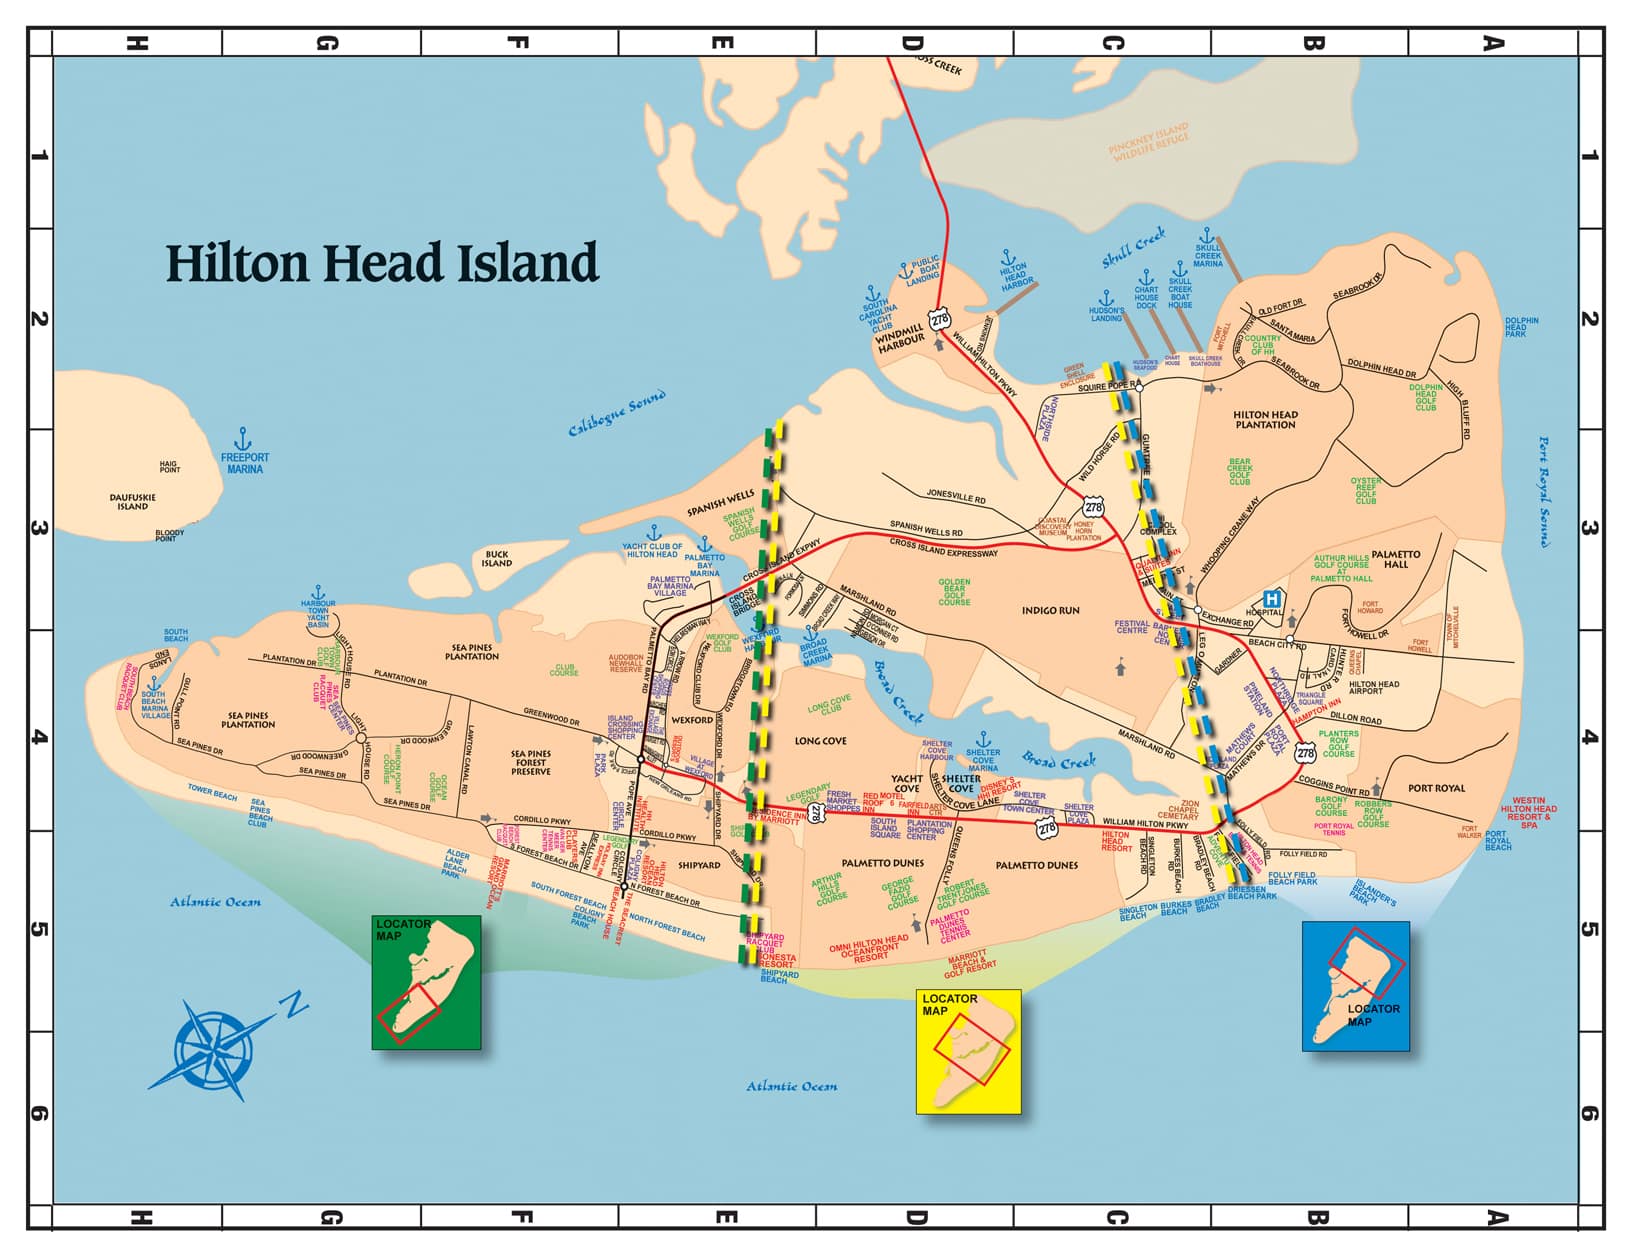 hilton-head-island-map-101-things-to-do-hilton-head